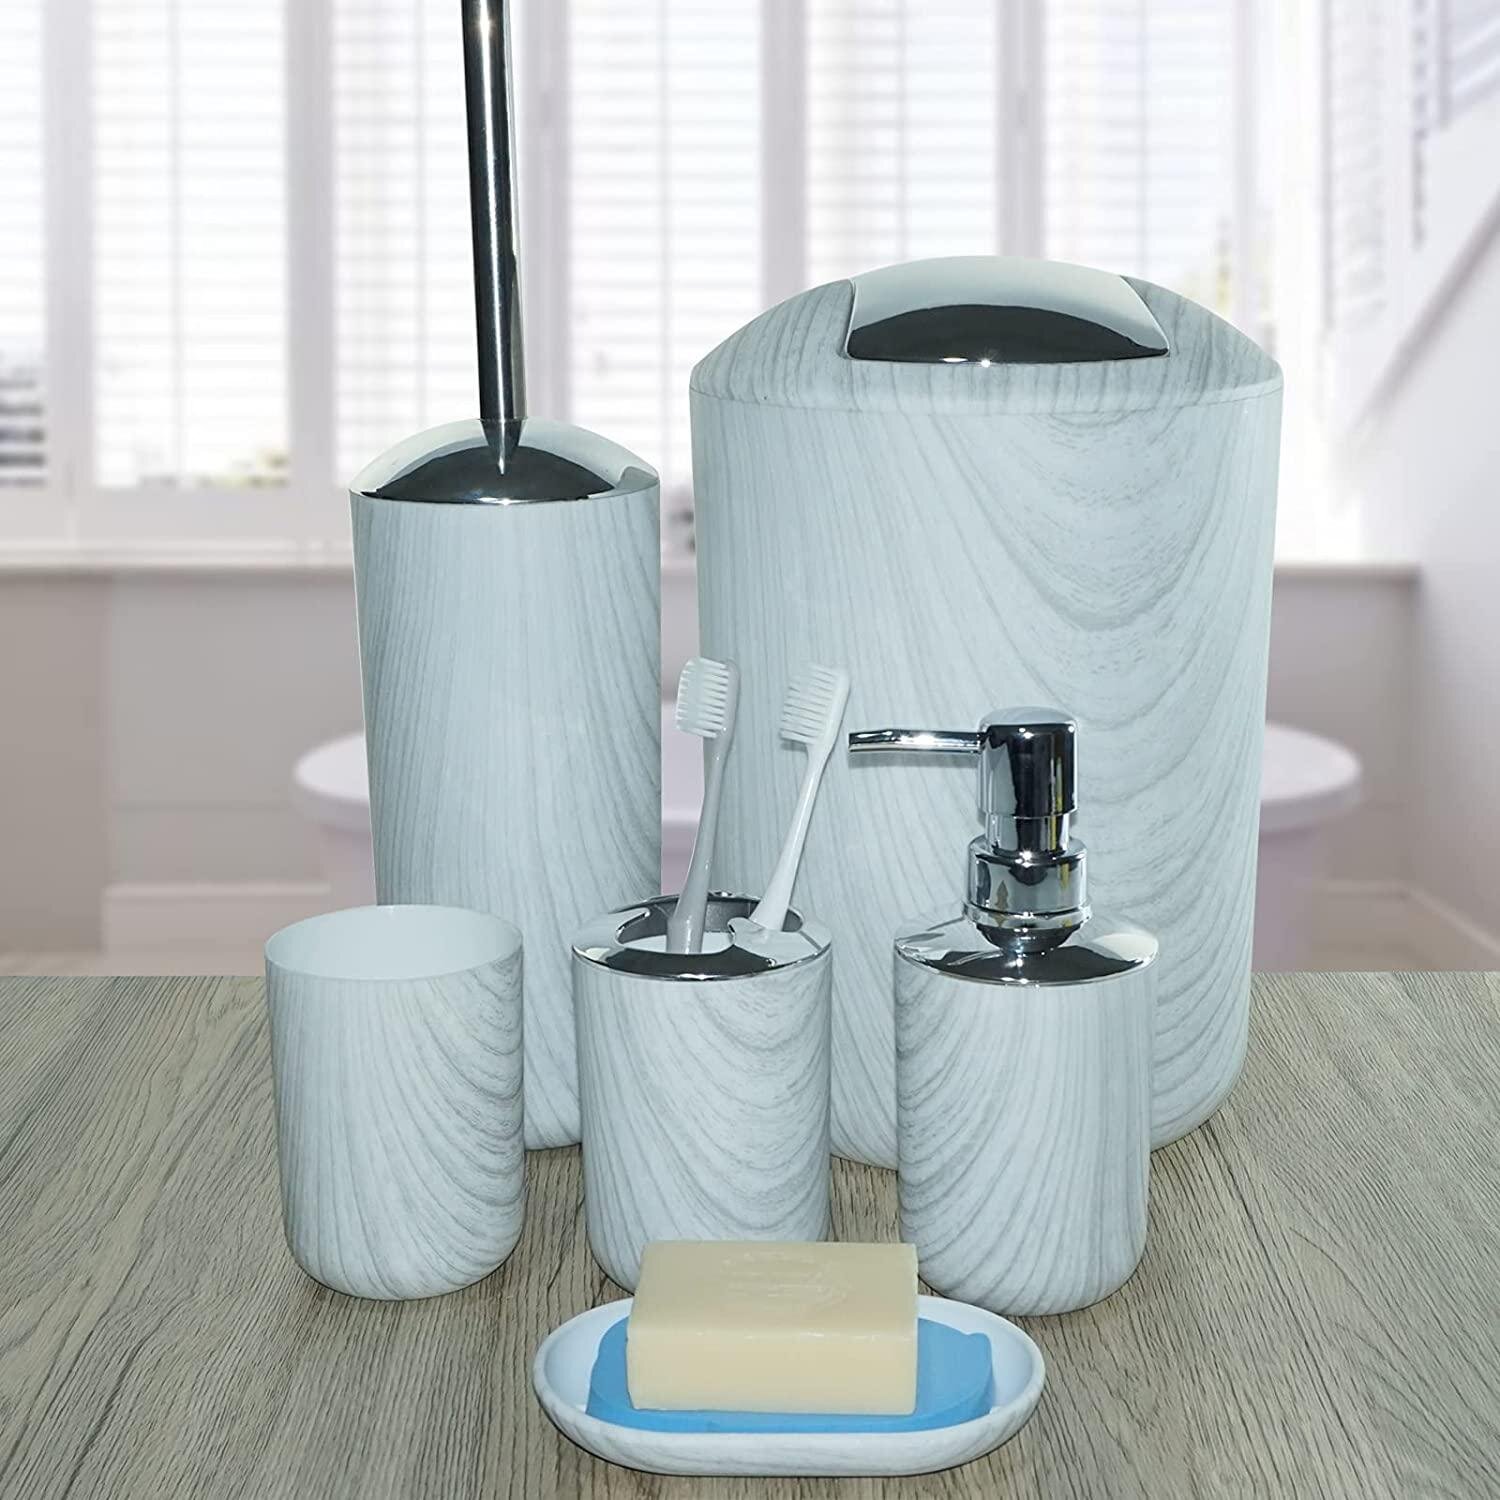 set/6Pc Bathroom Accessory Set Bin Soap Dish Dispenser Tumbler Toothbrush Holder